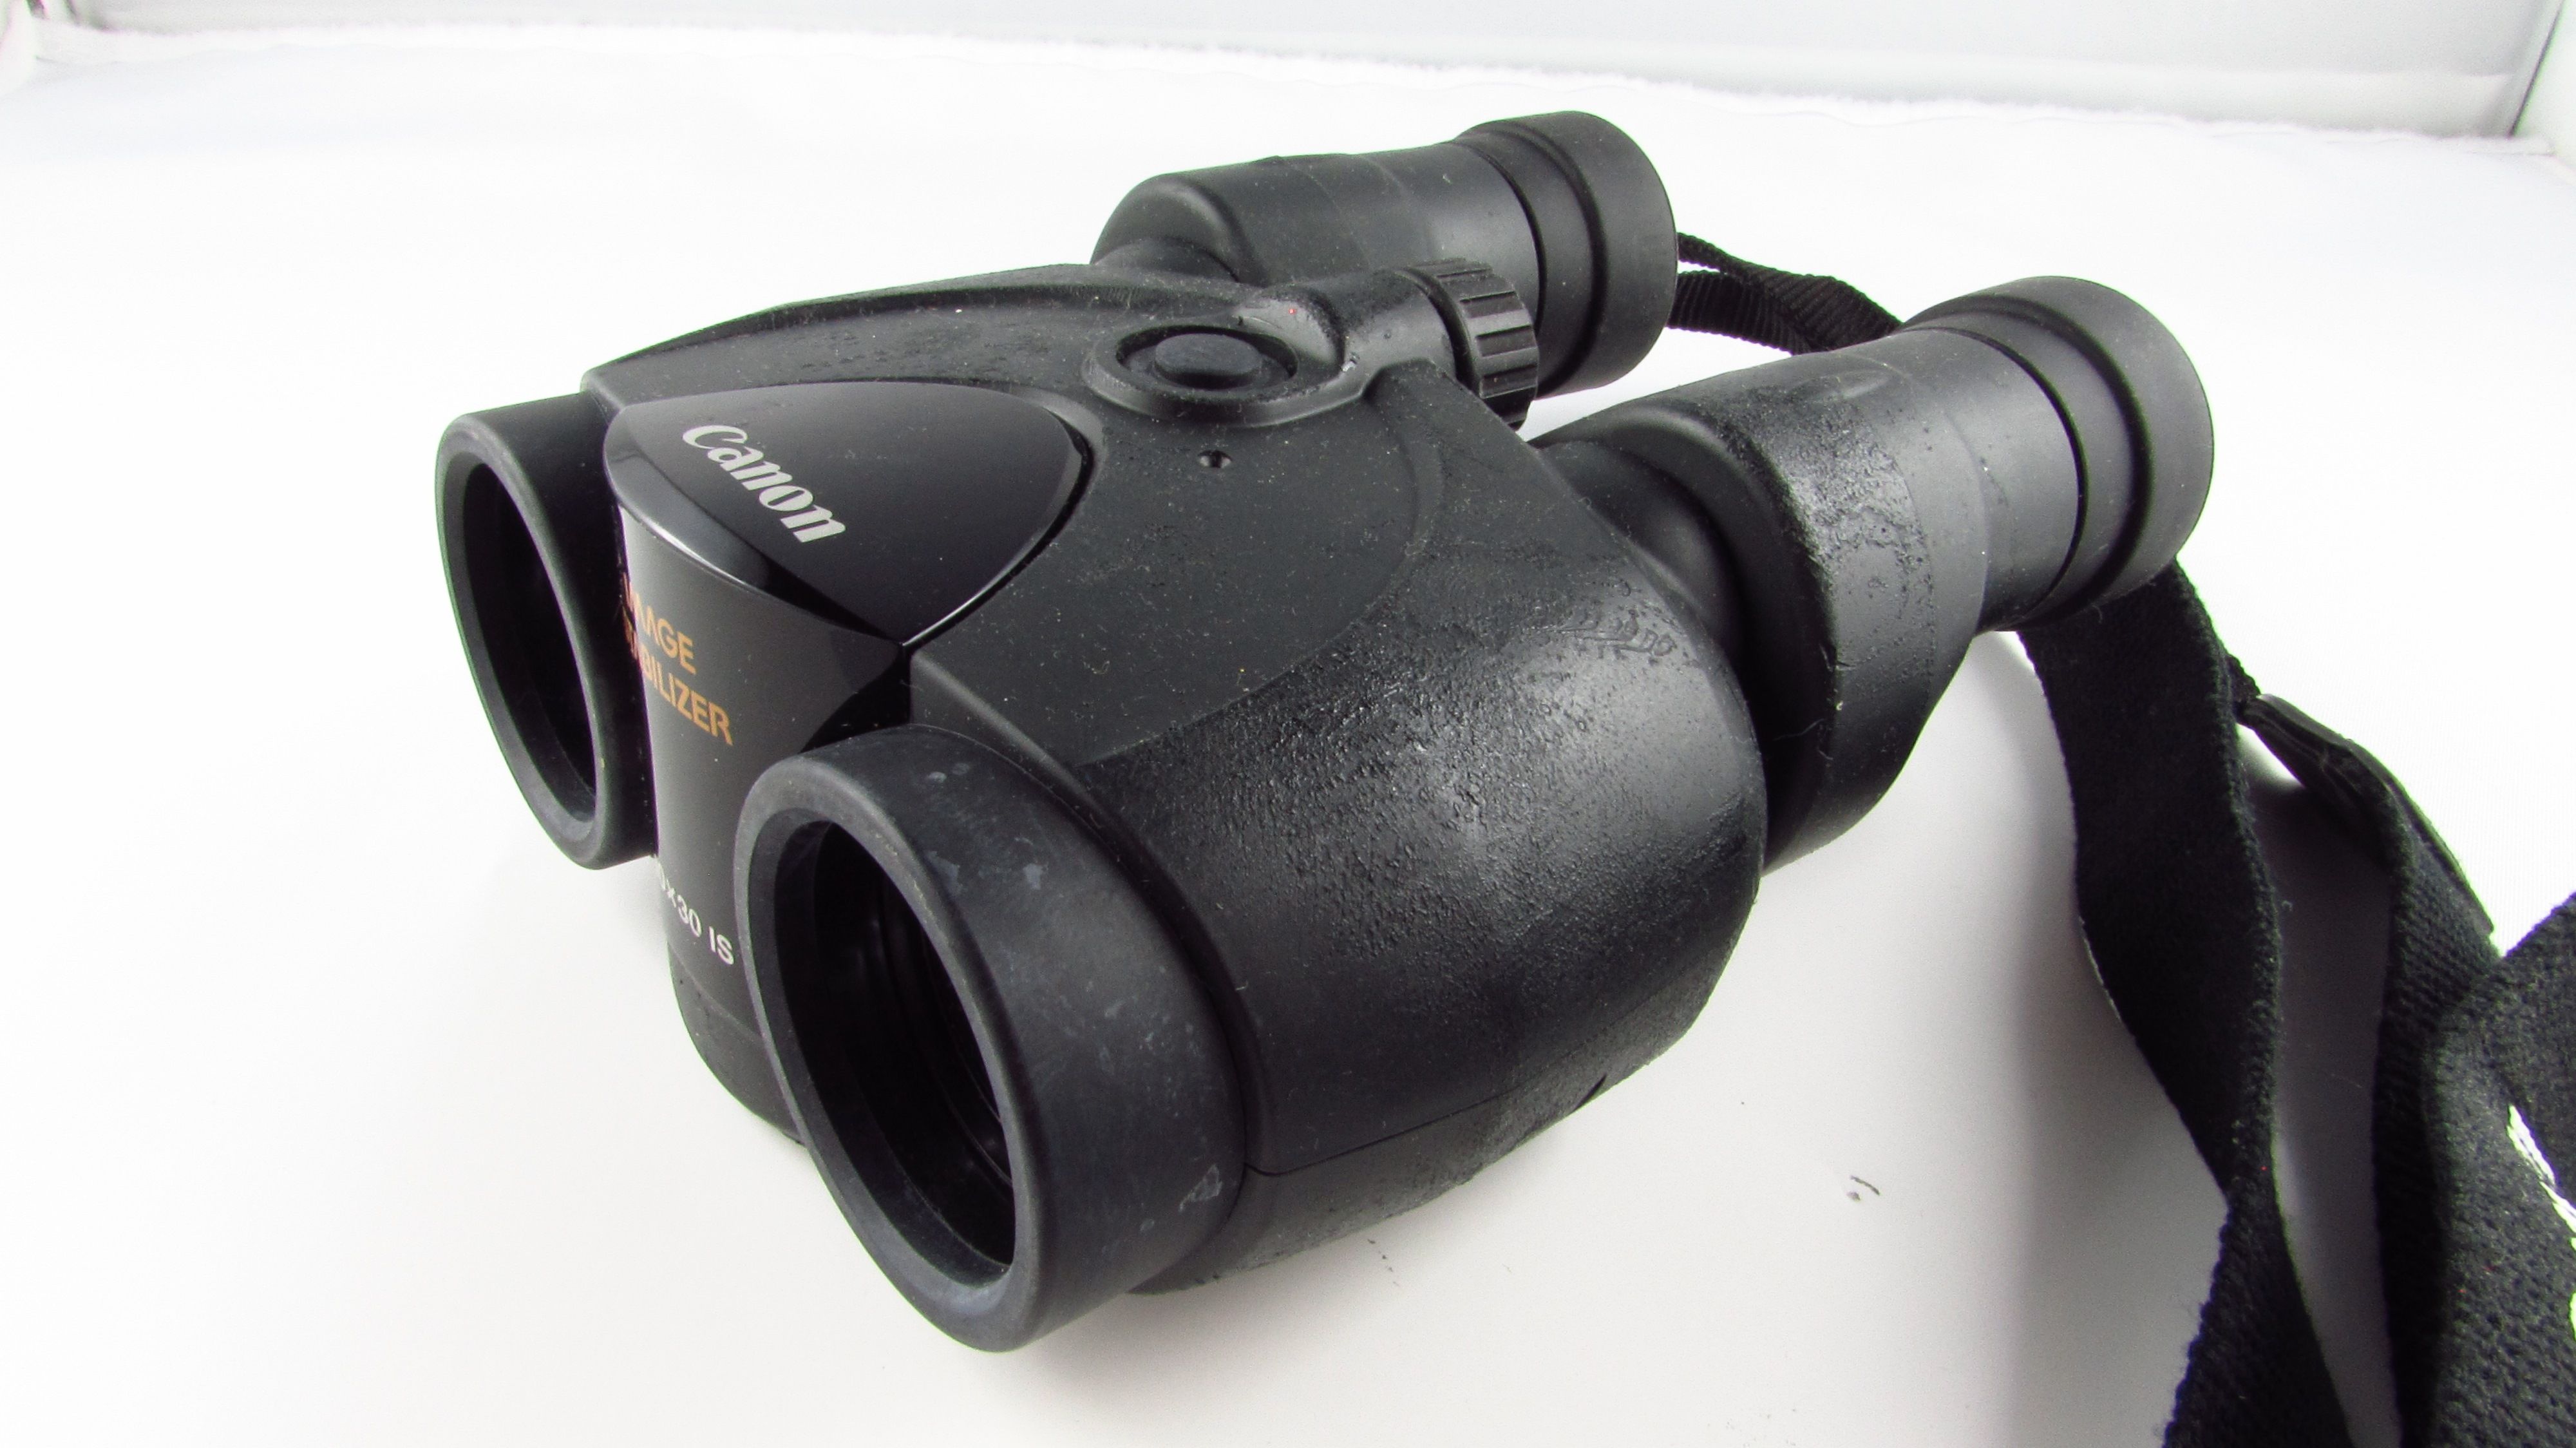 CANON - Lornetka Binoculars 10x30 IS Image Stablilizer